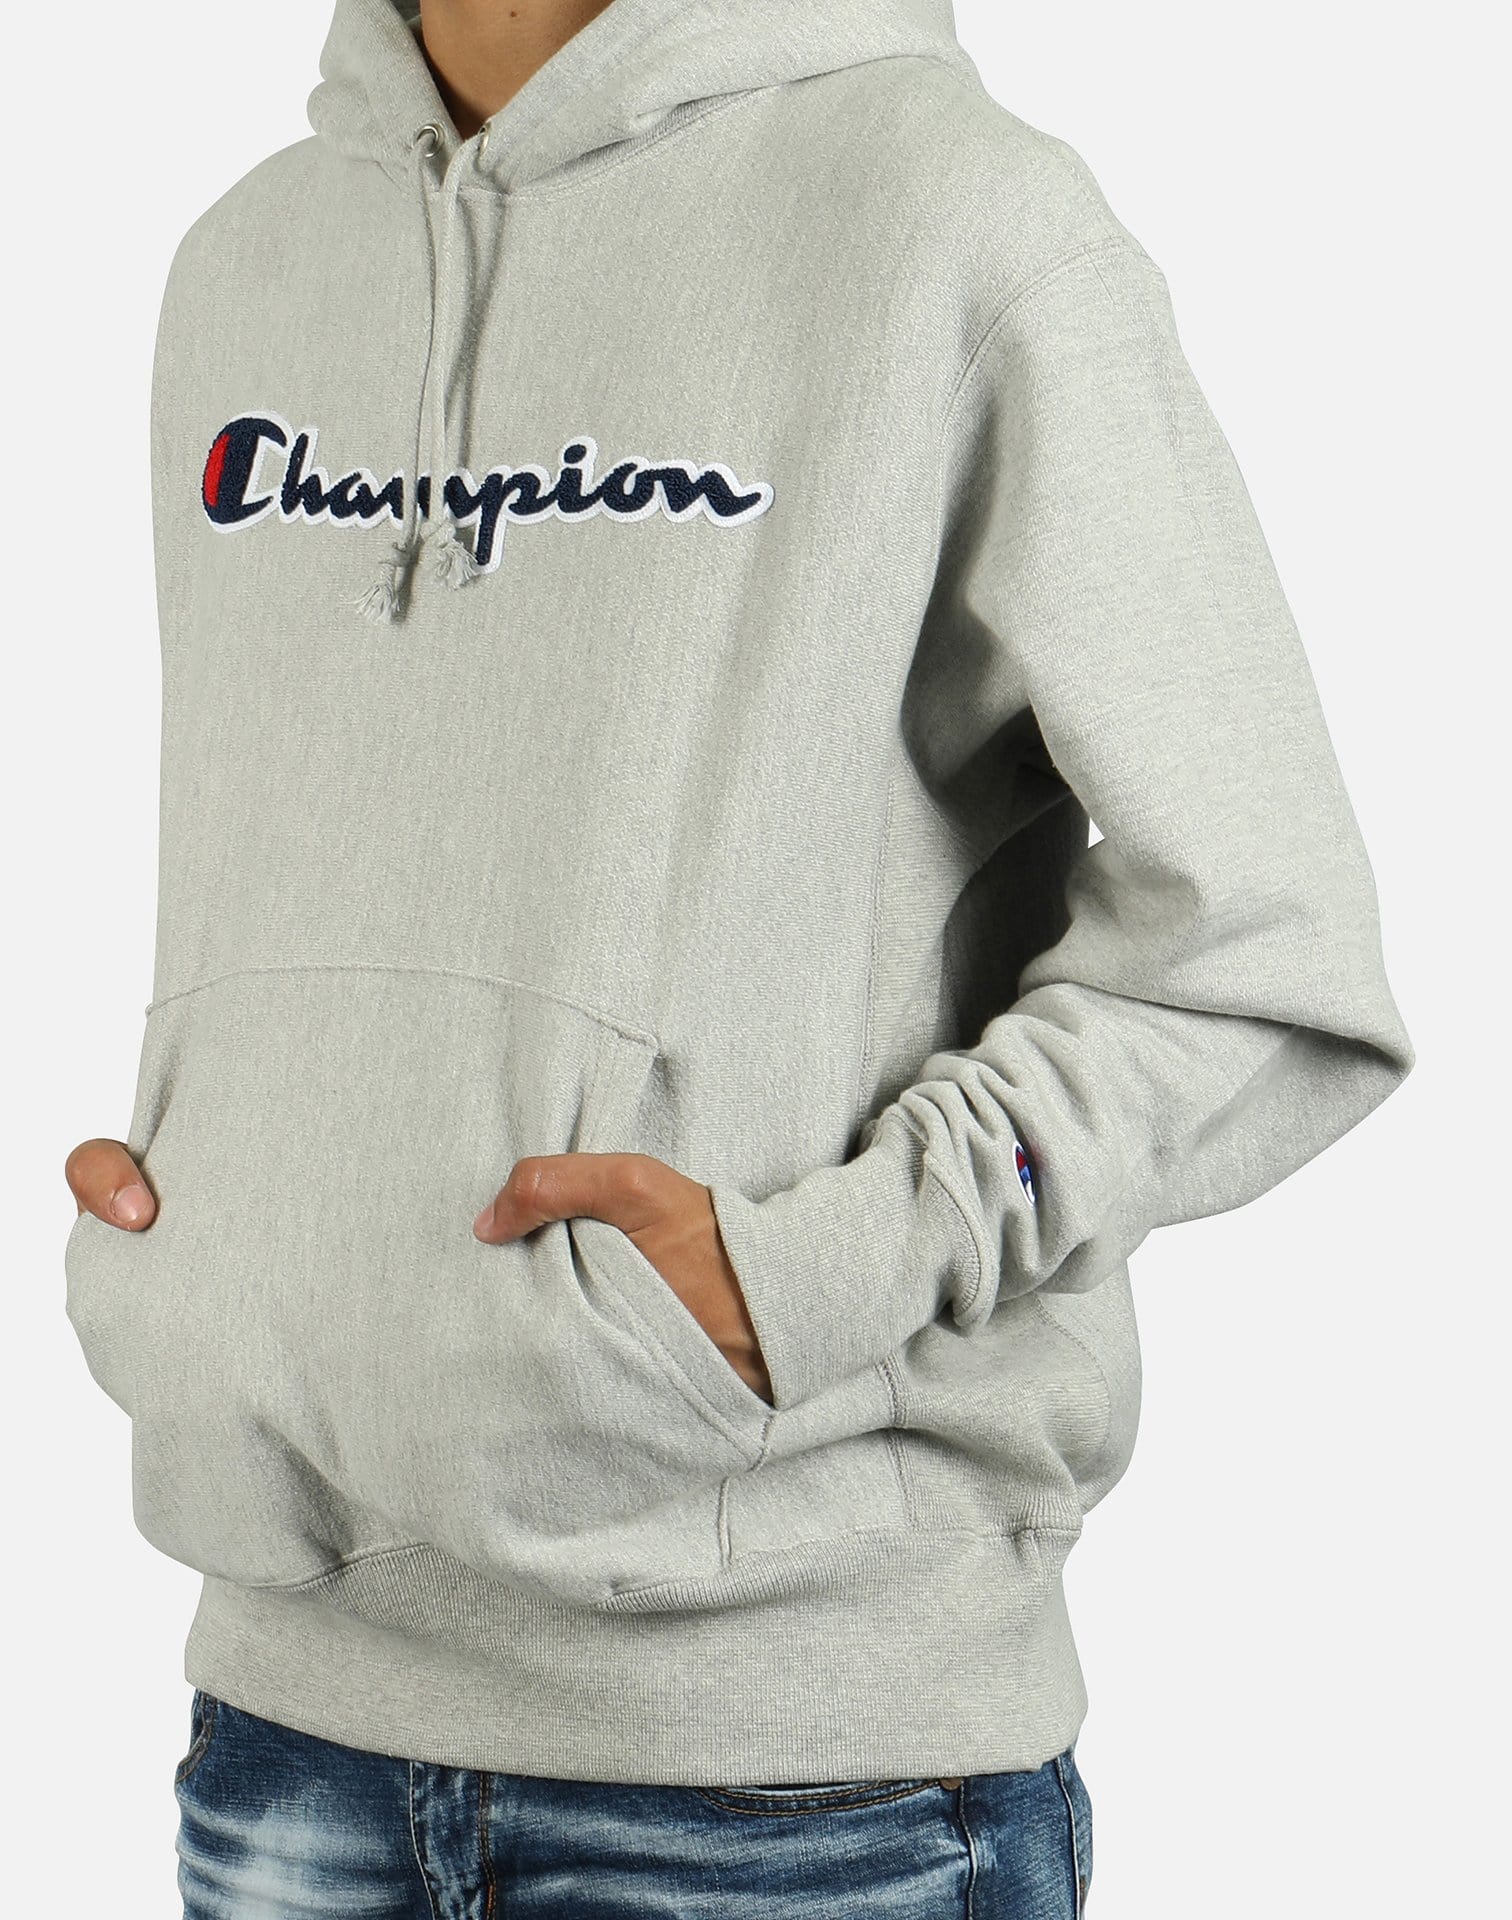 champion reverse weave chain stitch script logo gray mens hoodie